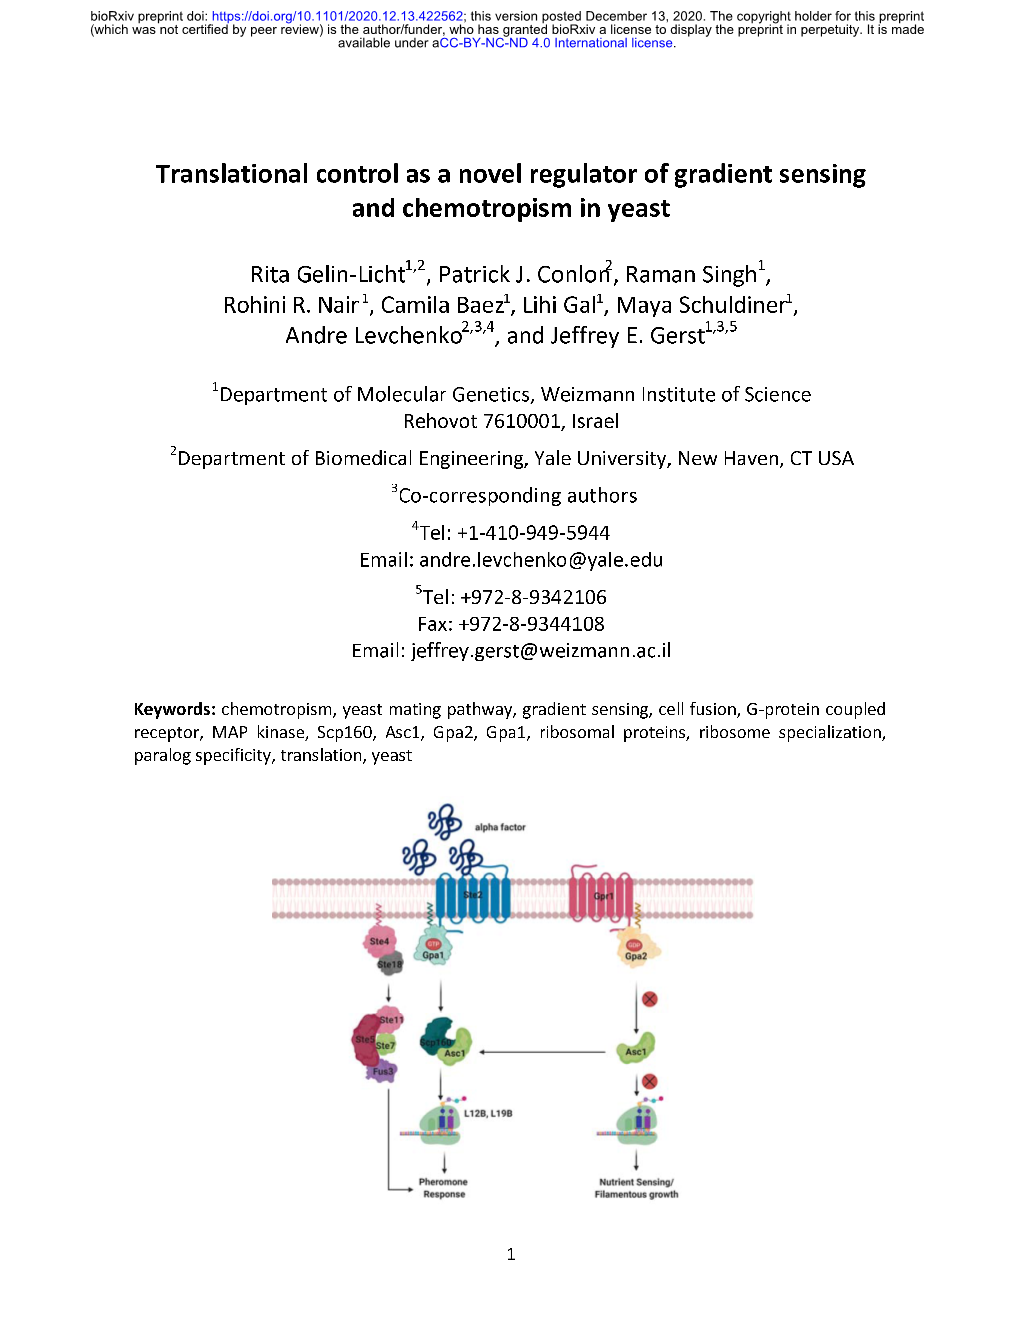 Translational Control As a Novel Regulator of Gradient Sensing and Chemotropism in Yeast